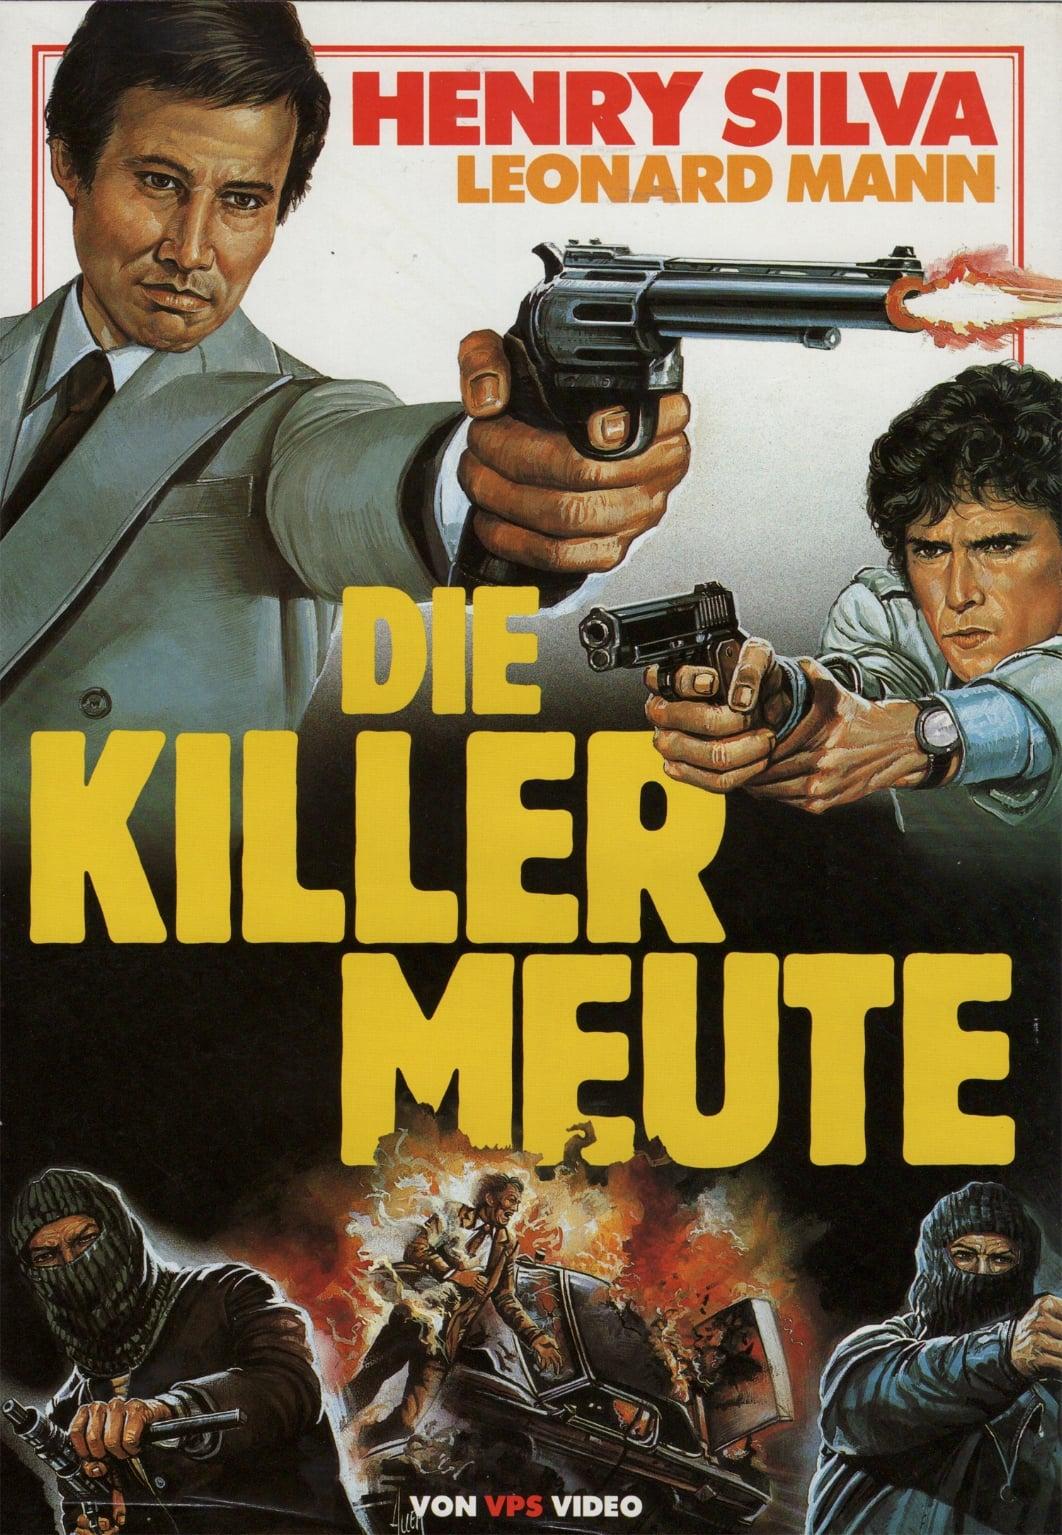 Die Killer-Meute poster